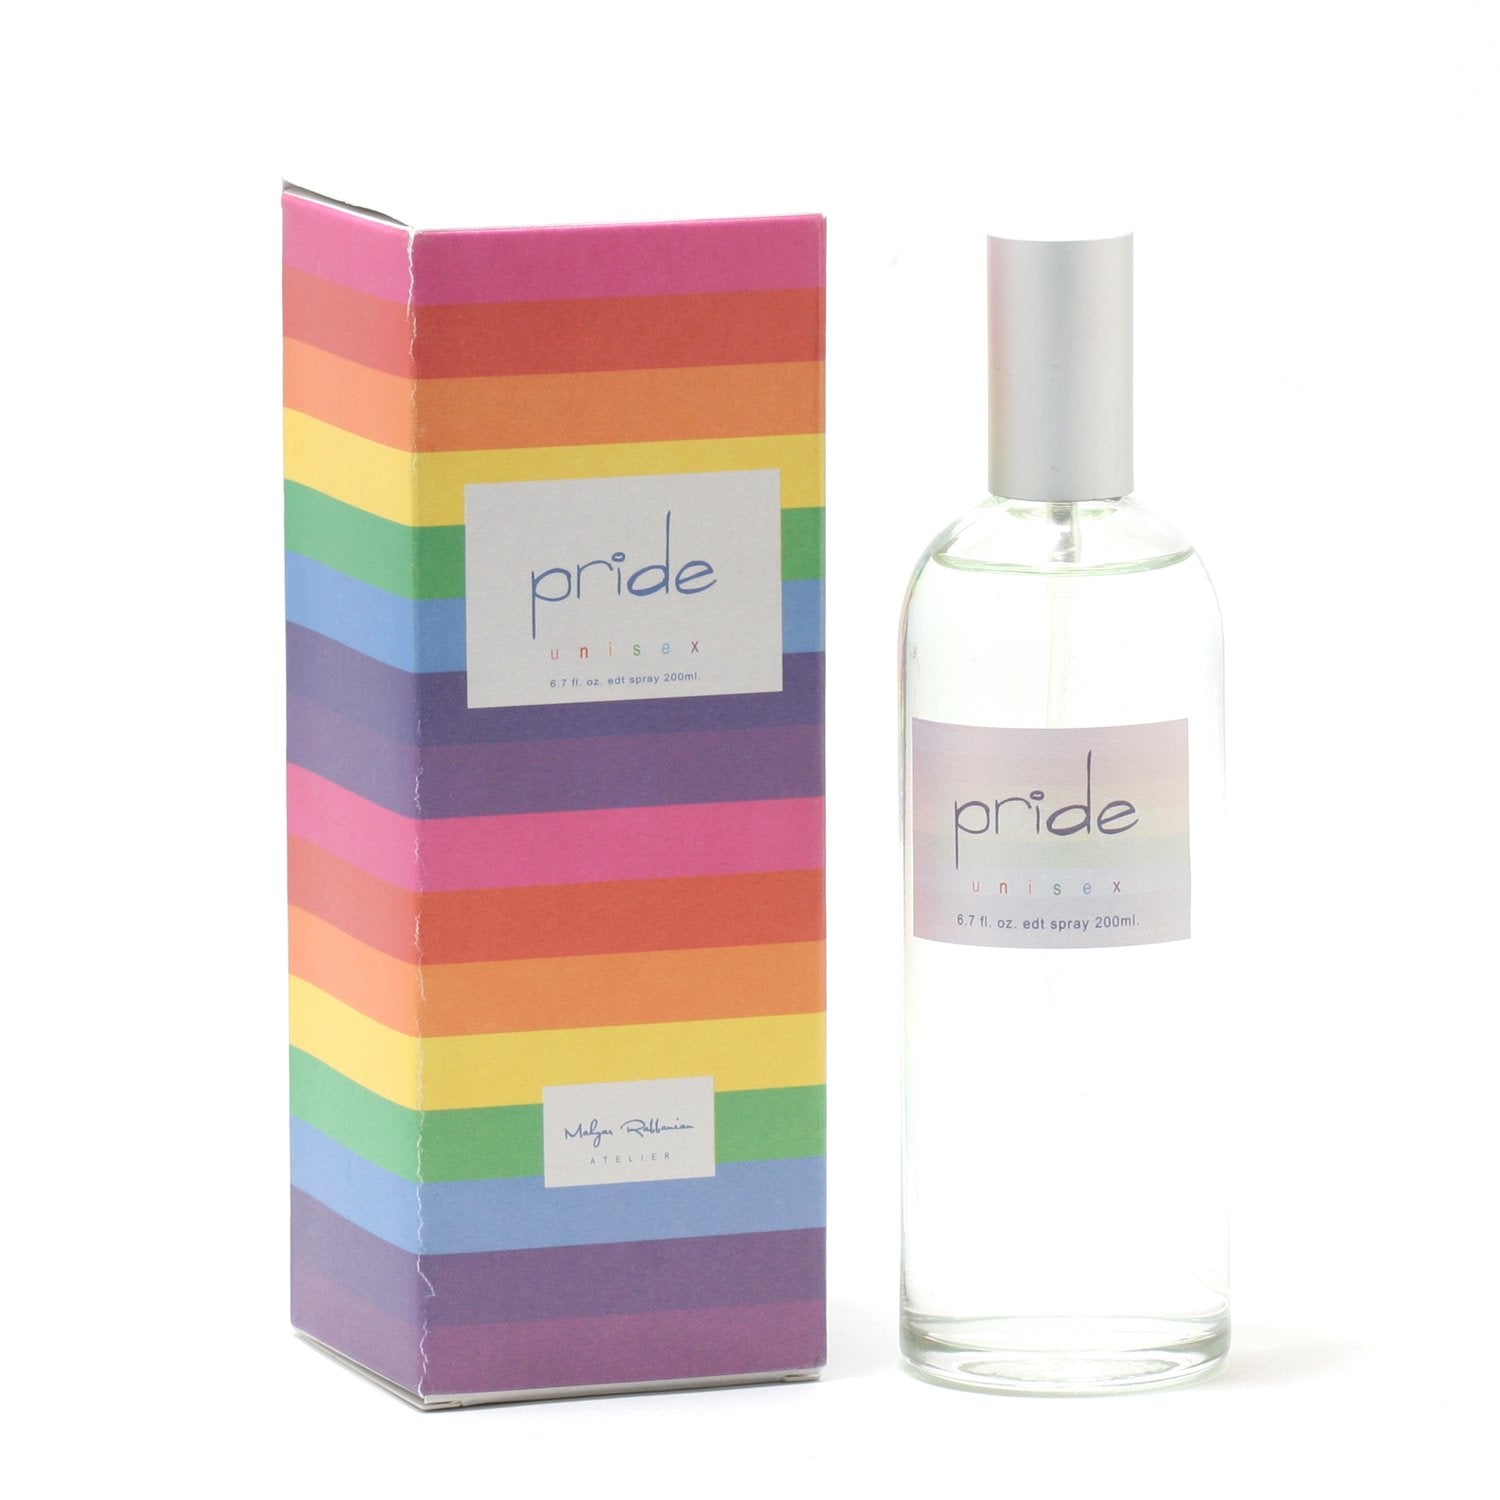 Perfume - PRIDE BY PERFUME SOURCE UNISEX  - EAU DE TOILETTE SPRAY, 6.7 OZ